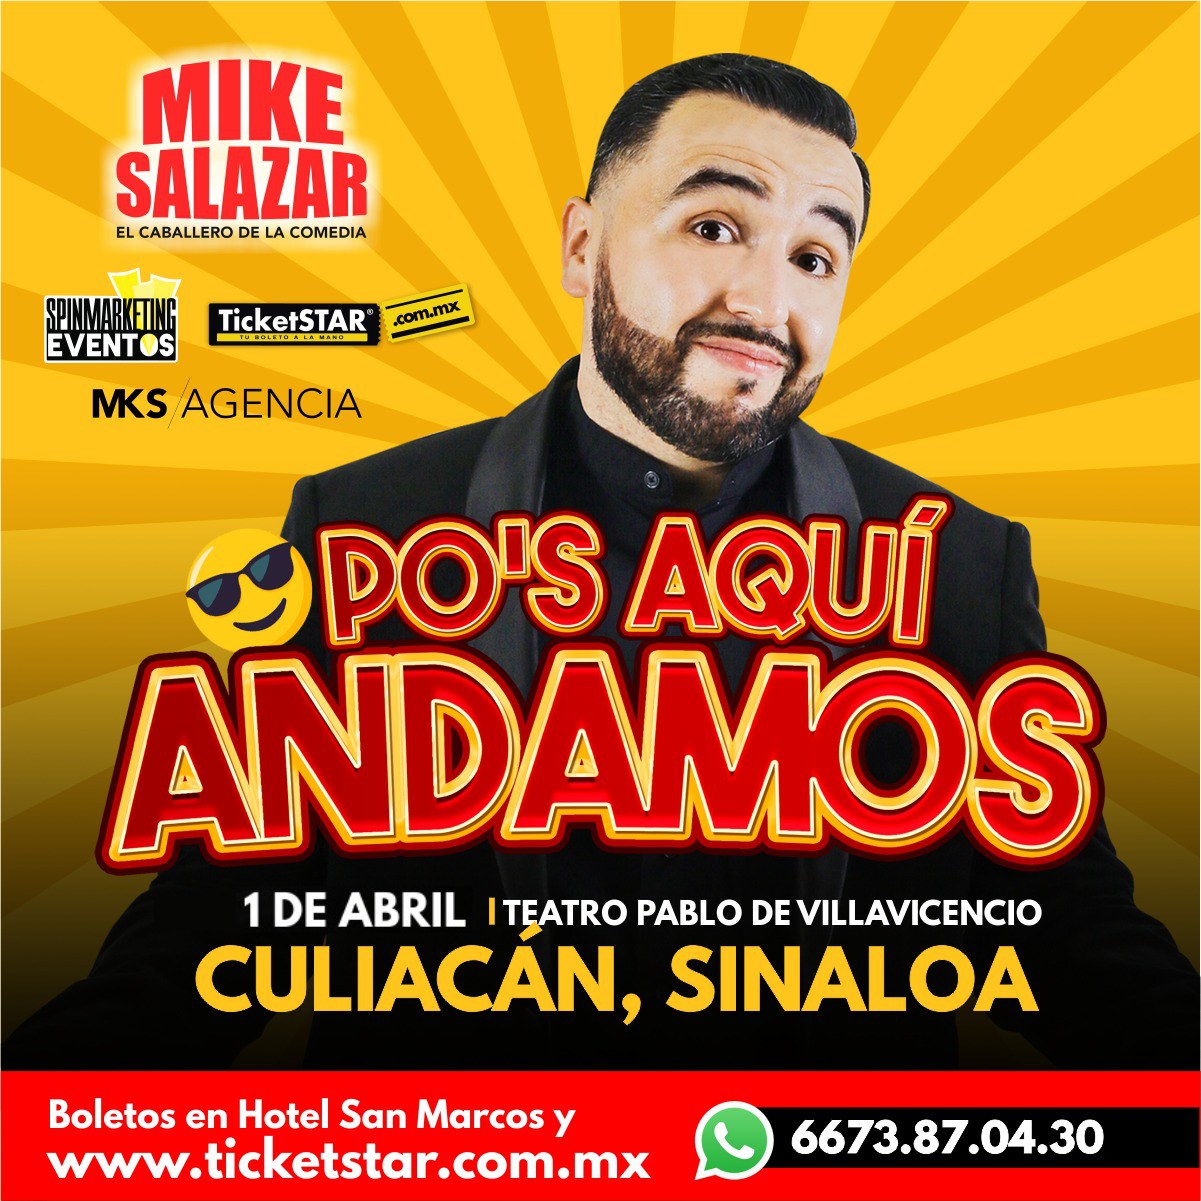 #ElCaballeroDeLaComedia ¡Mike Salazar regresa a Culiacán!